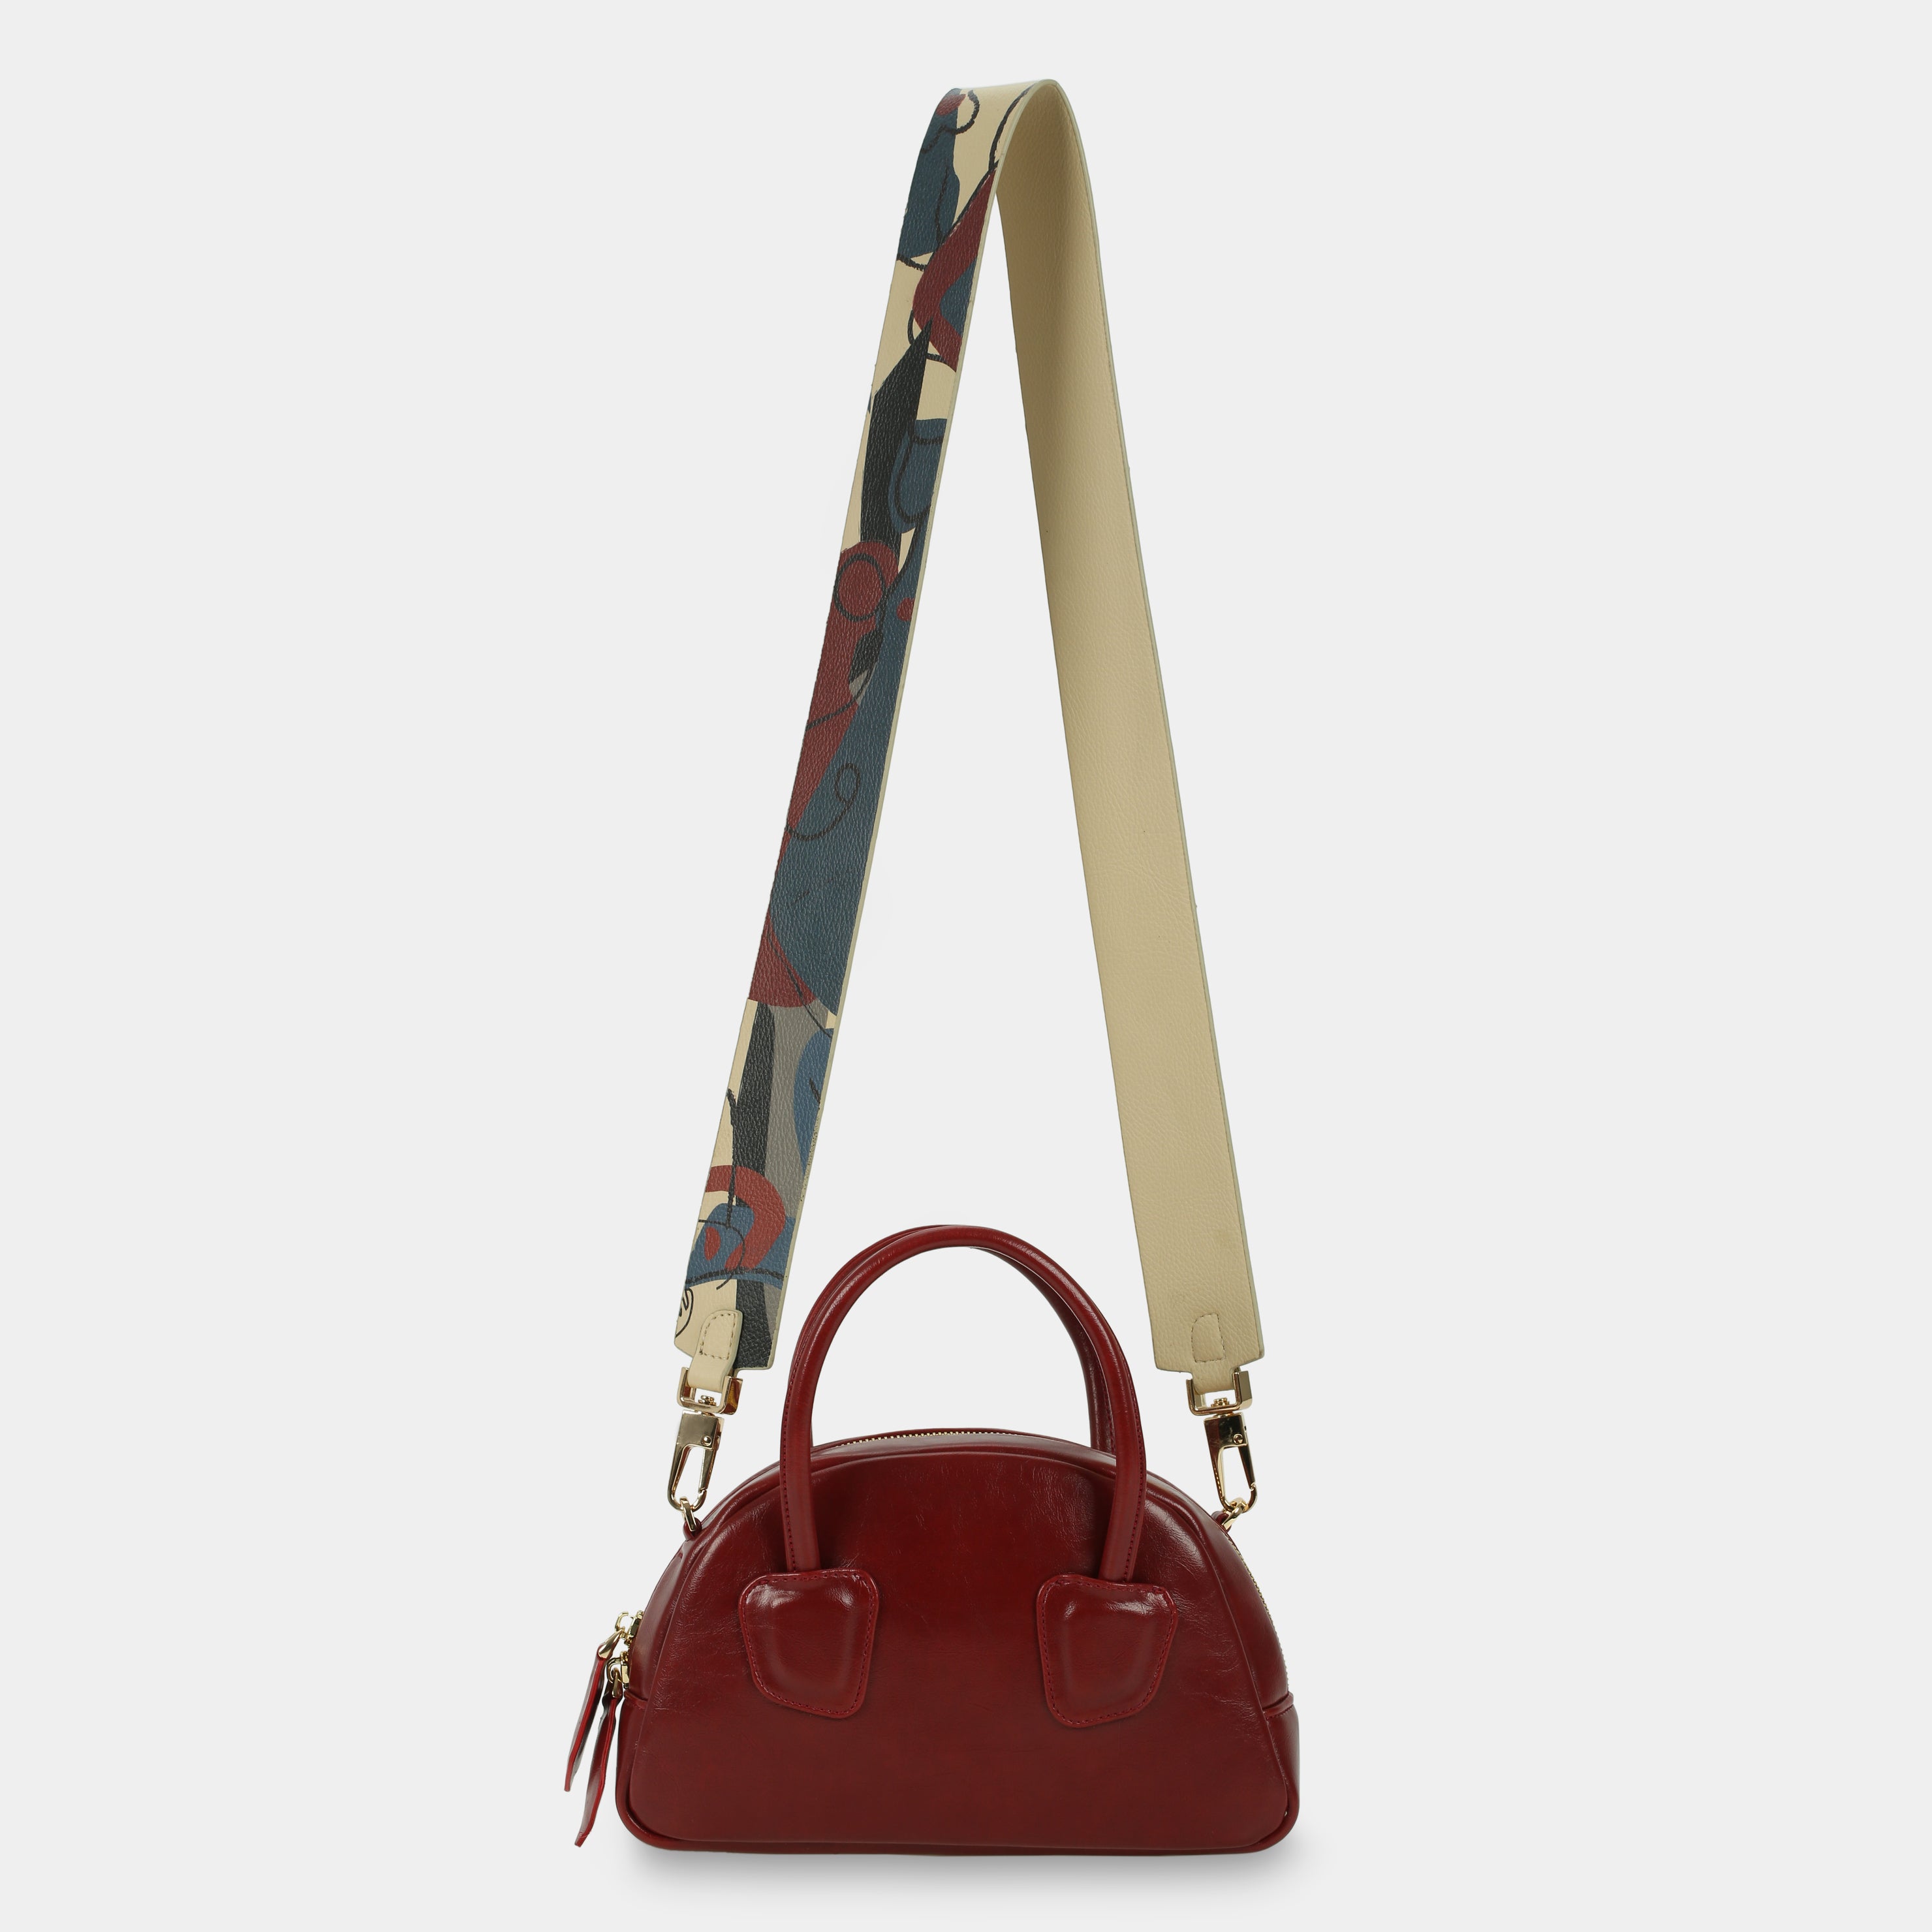 TACOS red handbag large size (M)